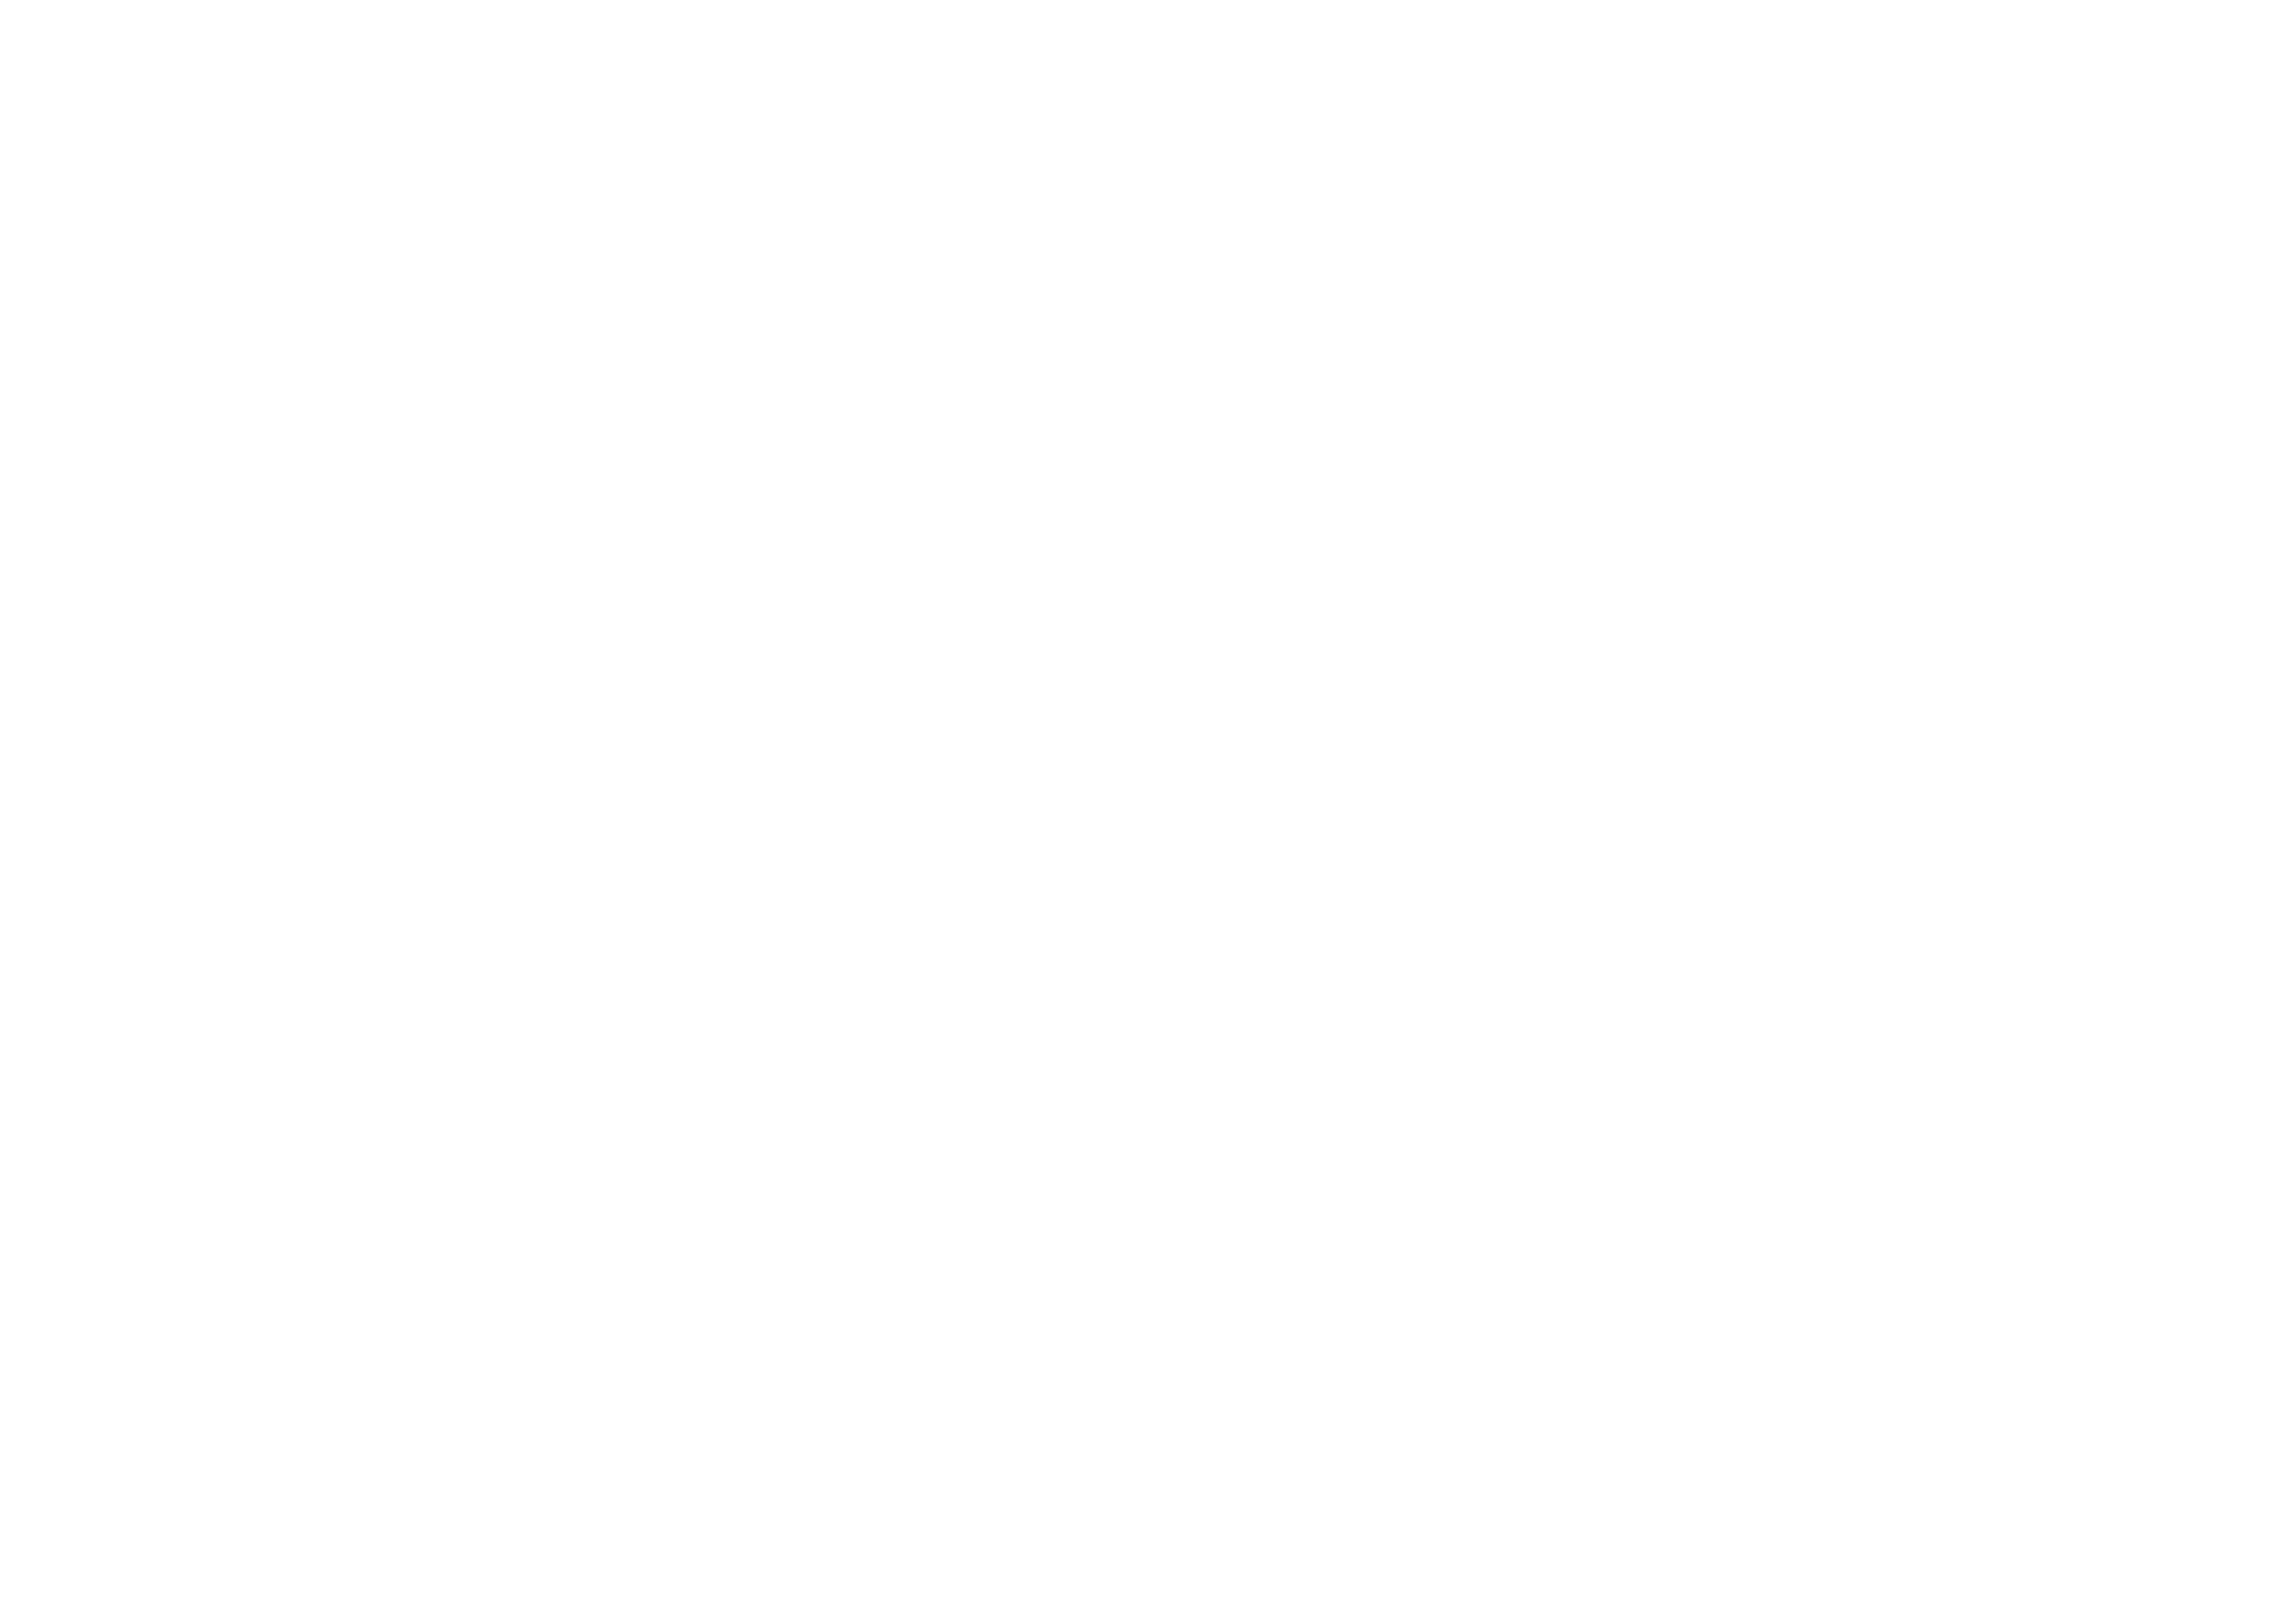 C6 Boards